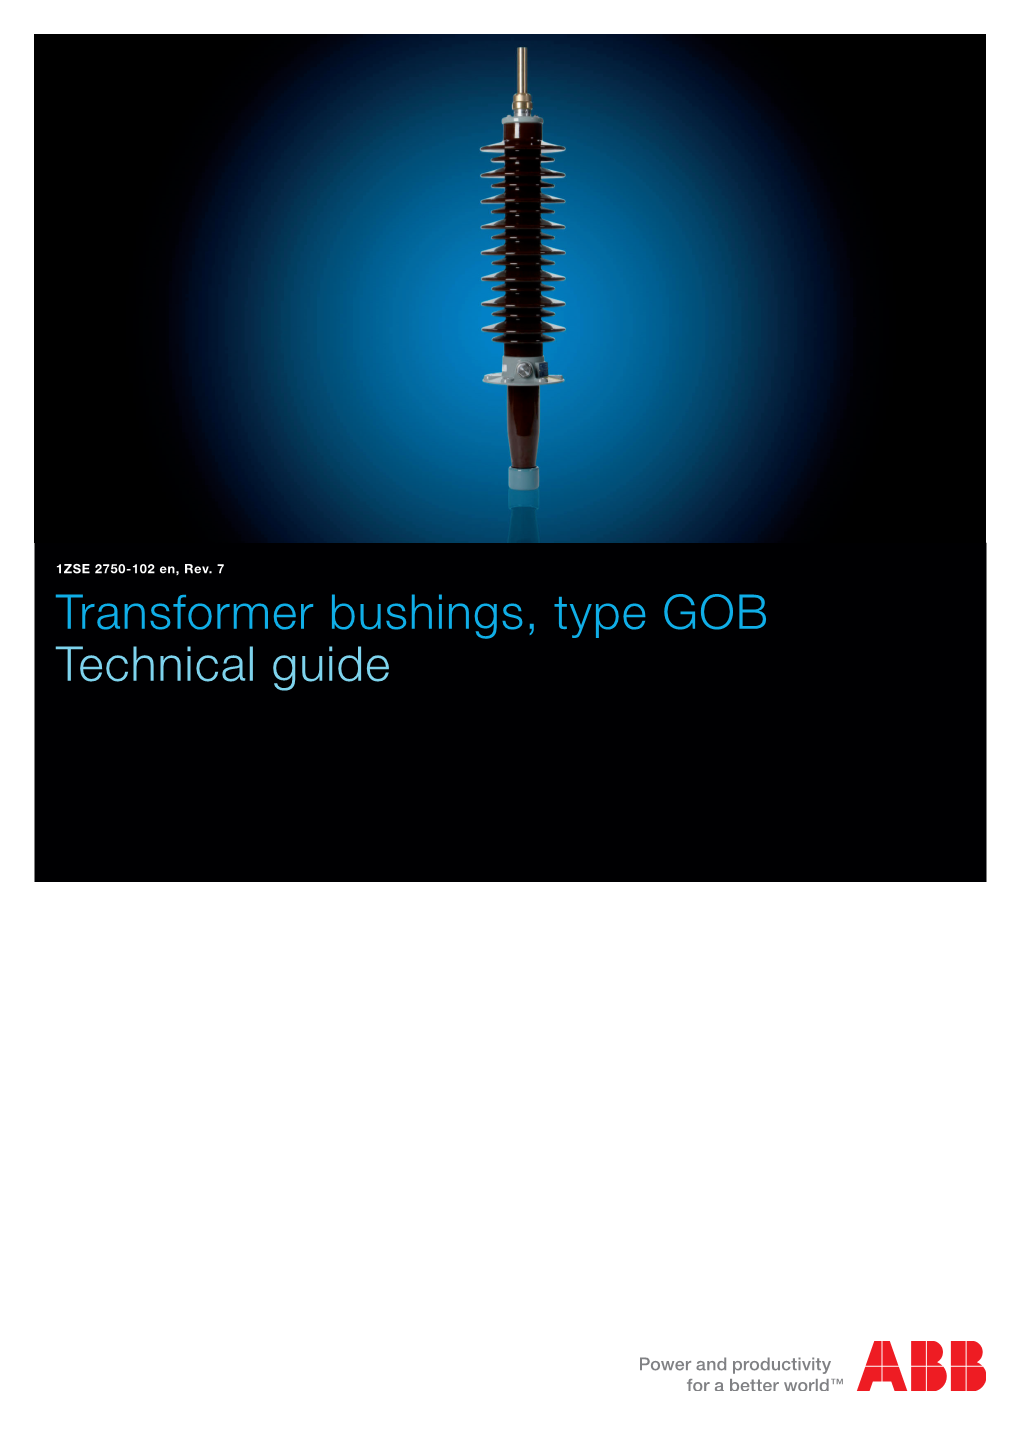 Transformer Bushings, Type GOB Technical Guide